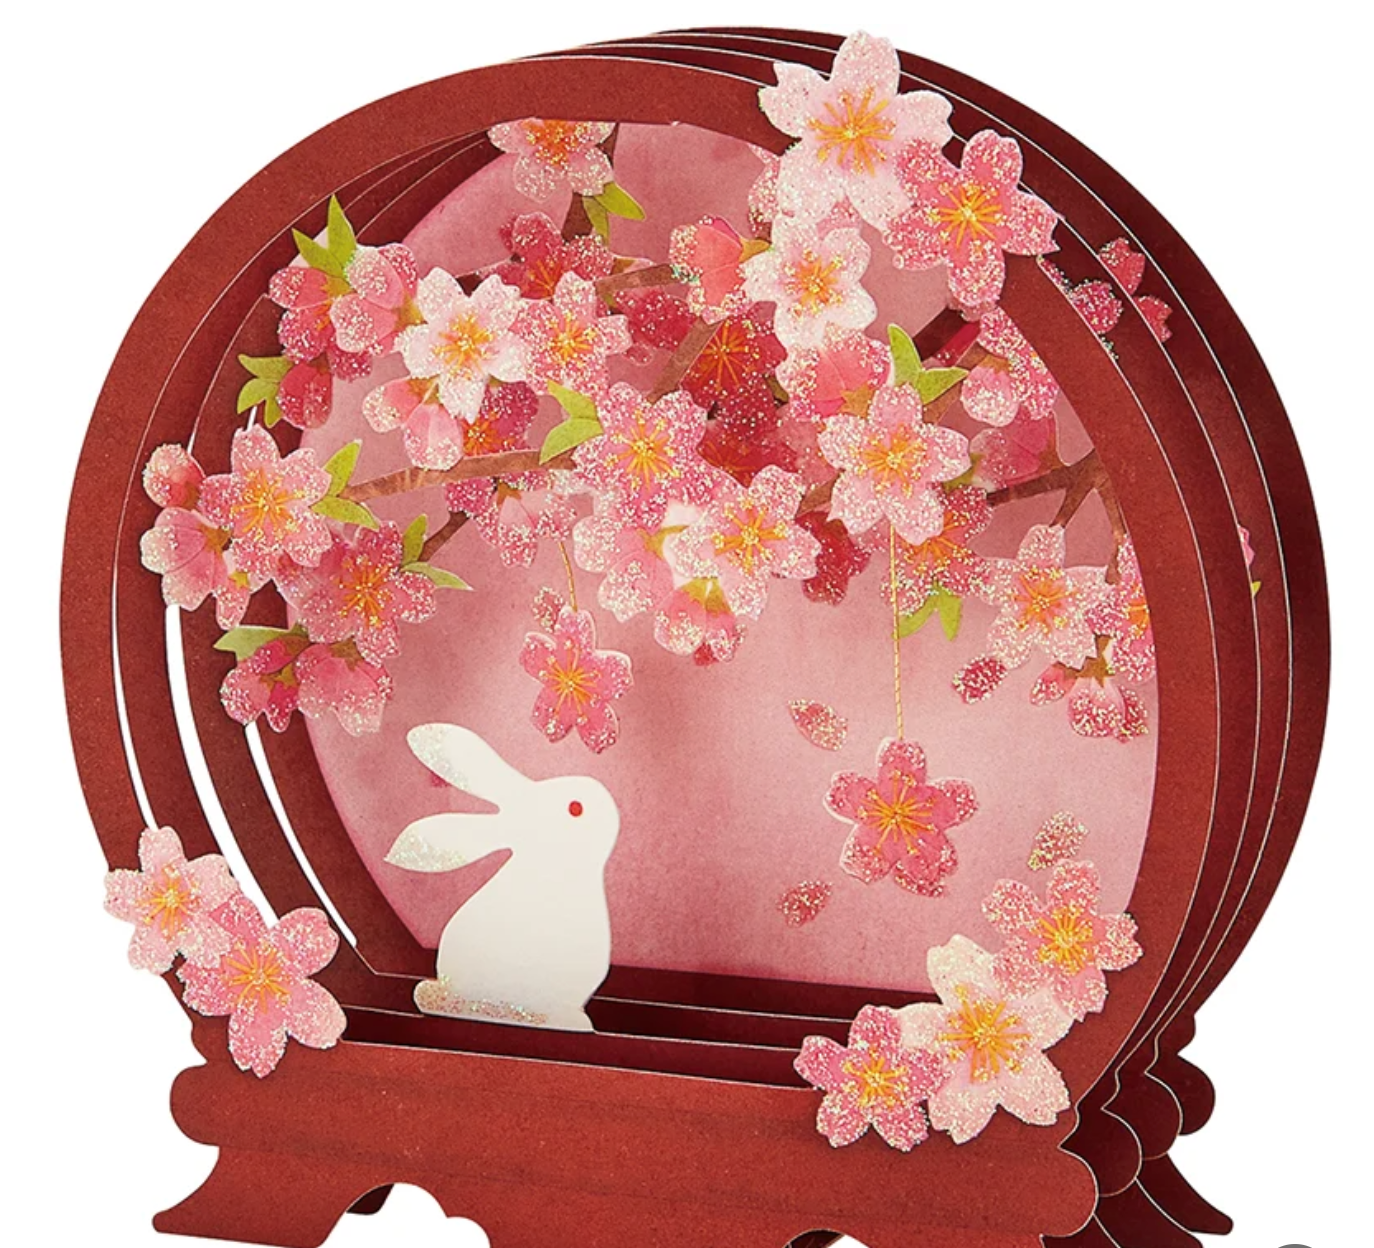 Sanrio Pop-Up Greeting Card - Sakura Round Terrace with Rabbit